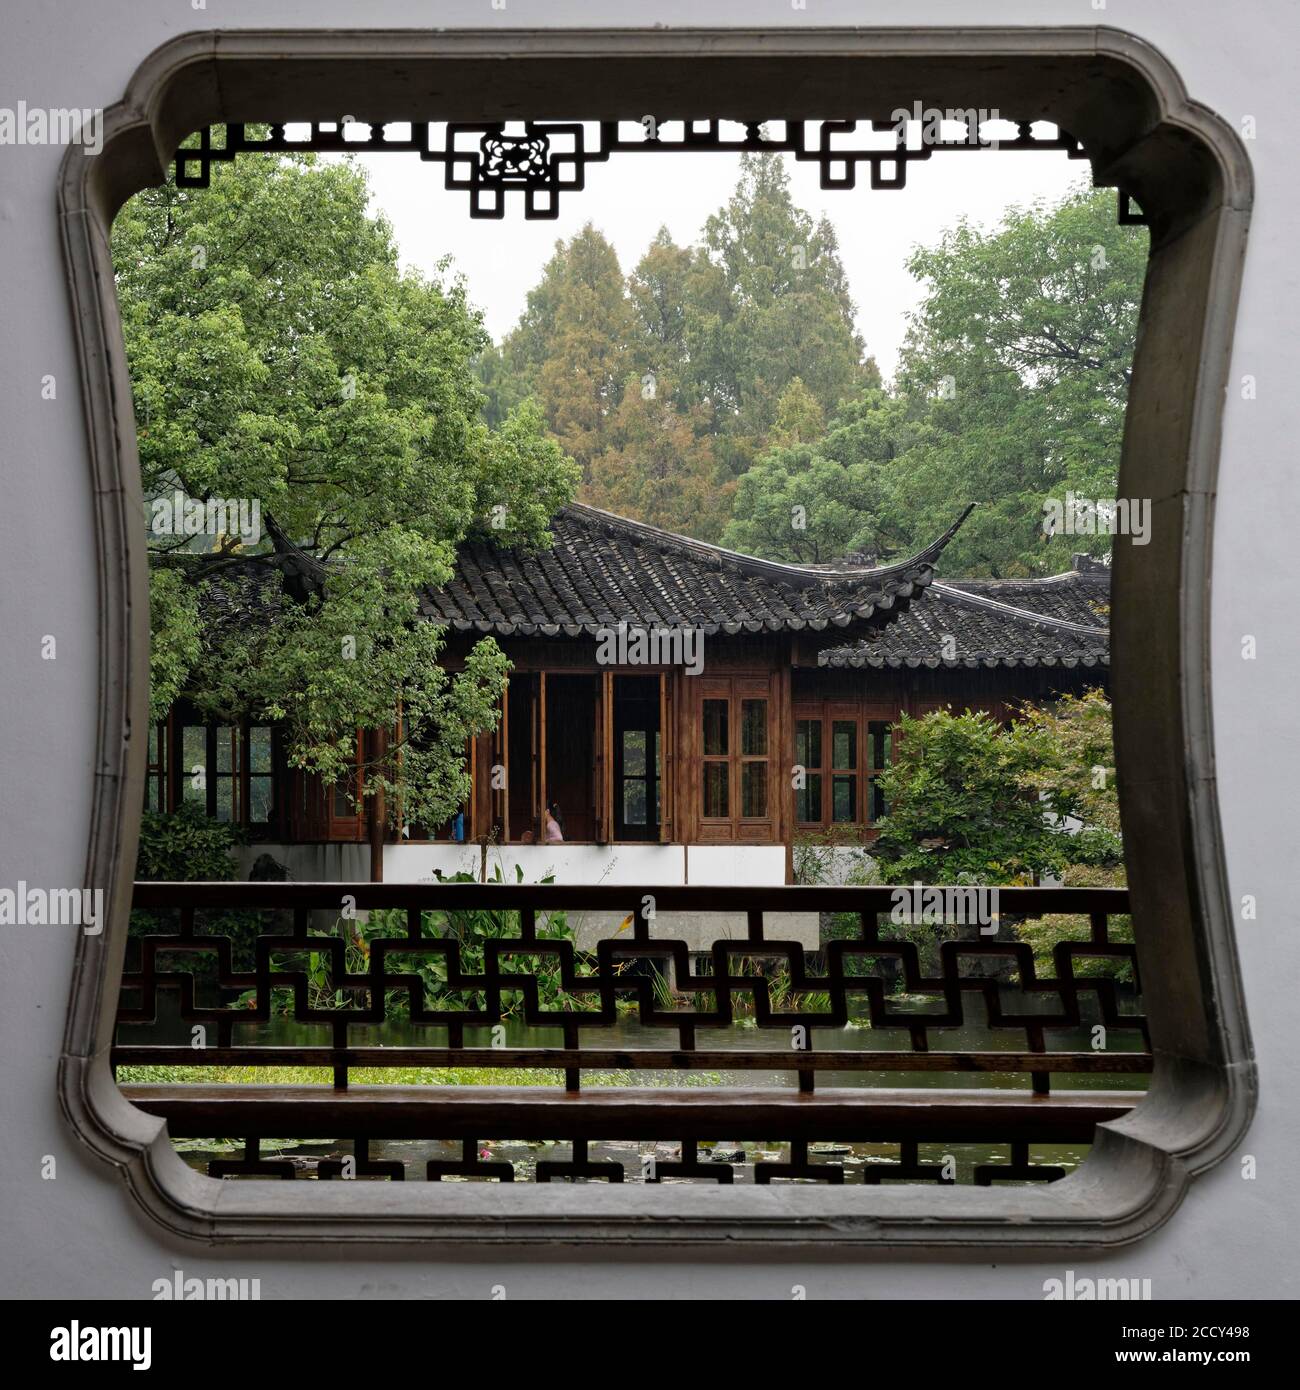 Zhejiang sheng hi-res stock photography and images - Alamy